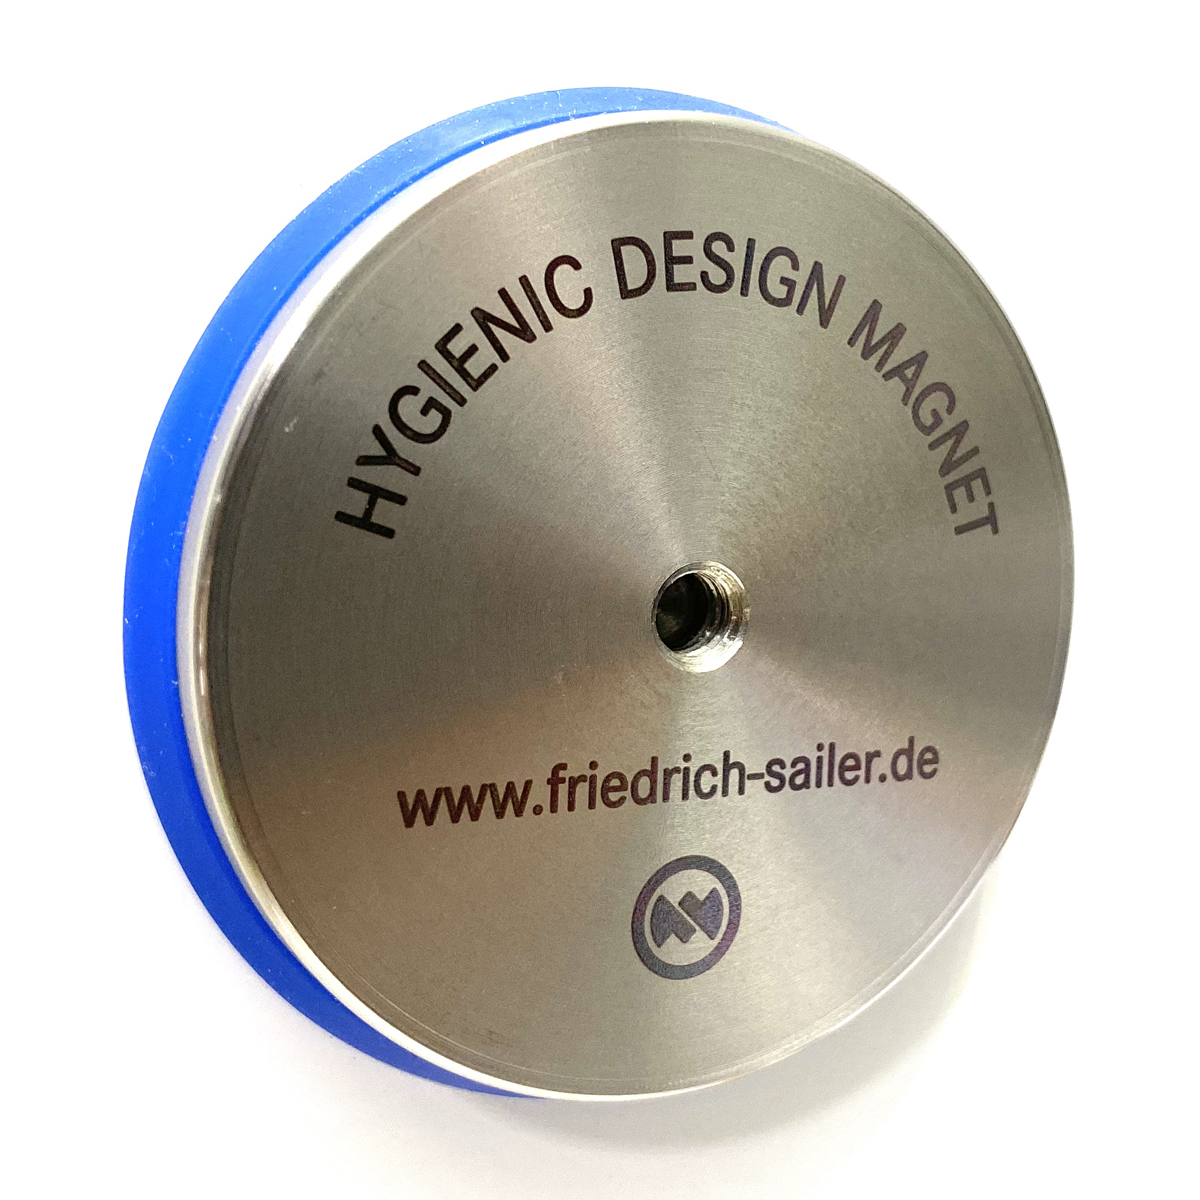 Hygienic Design Magnet